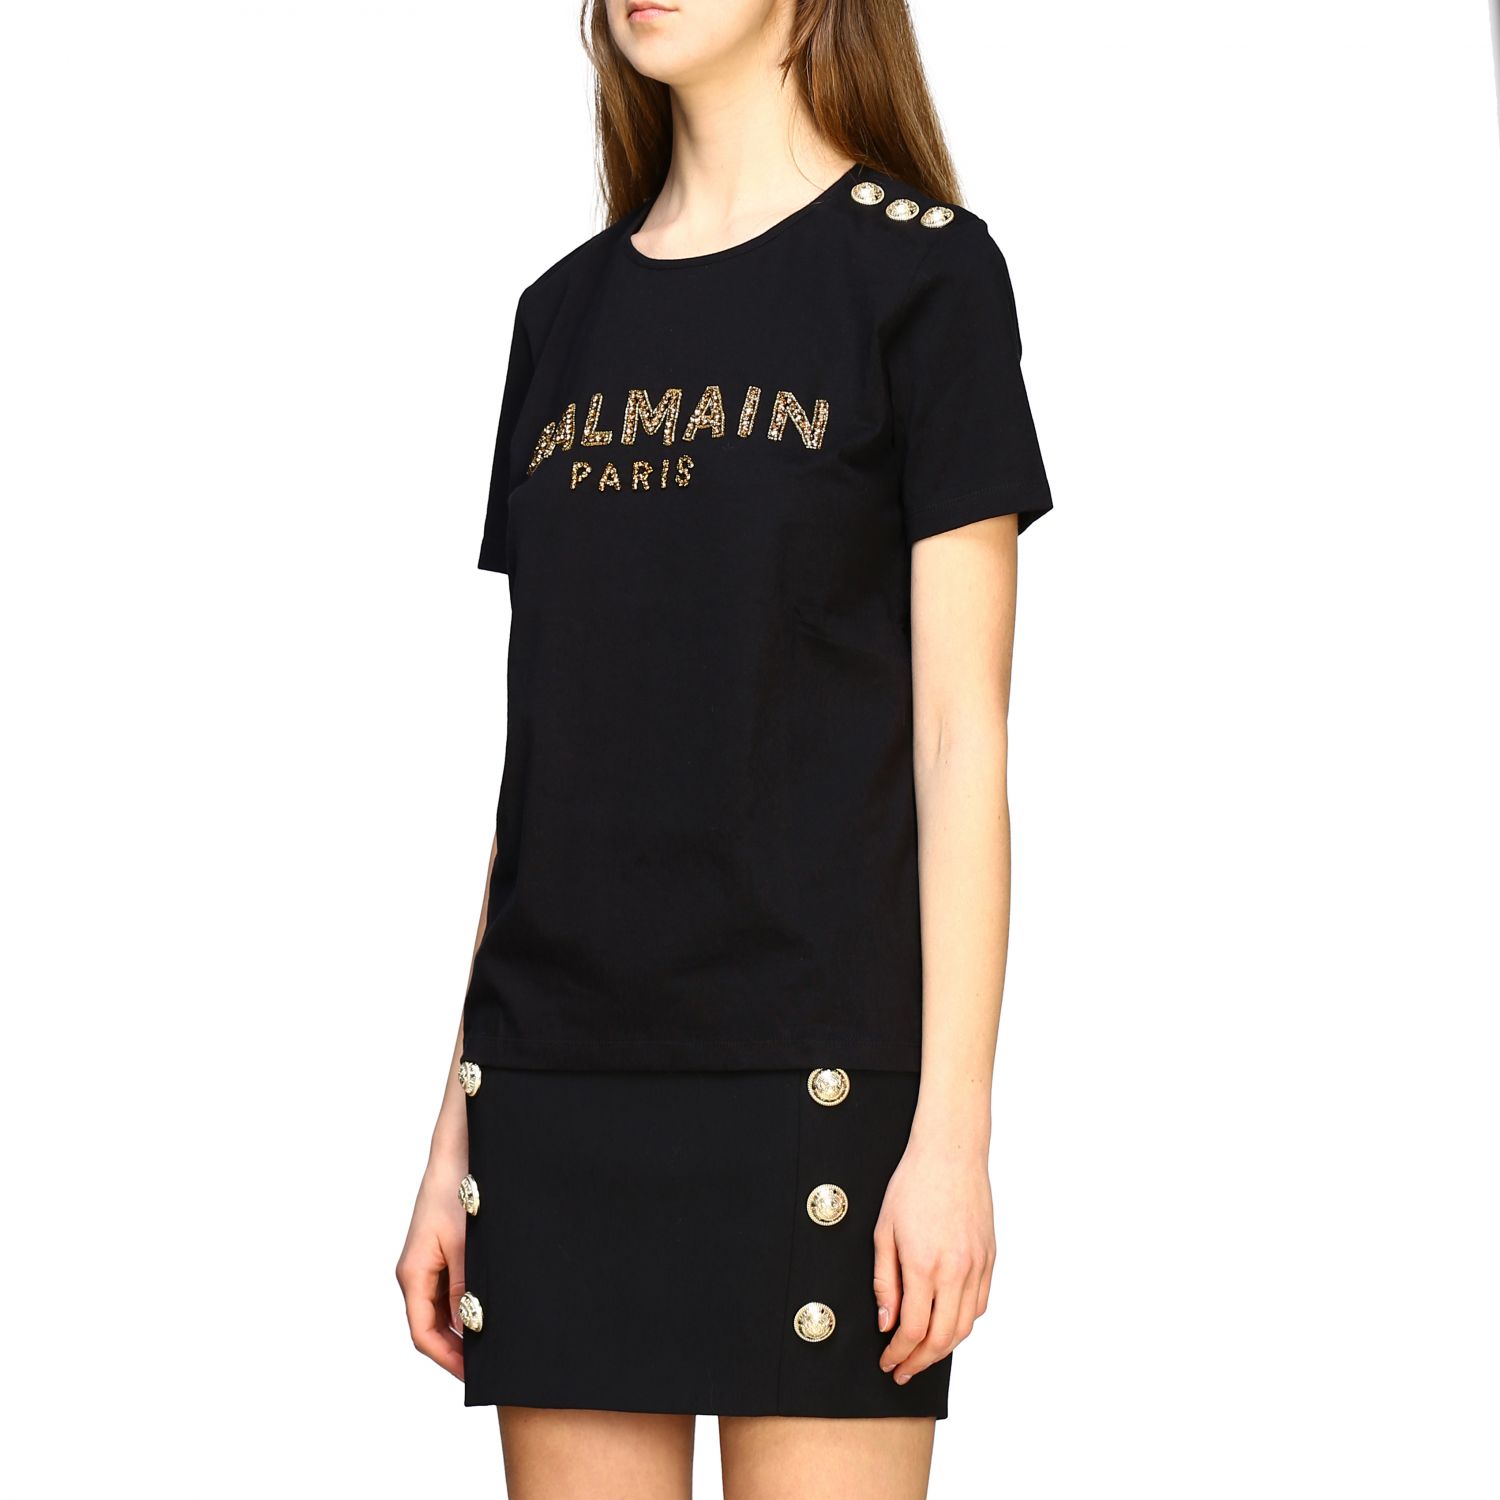 Balmain Outlet: T-shirt women | T-Shirt Balmain Women Black | T-Shirt ...